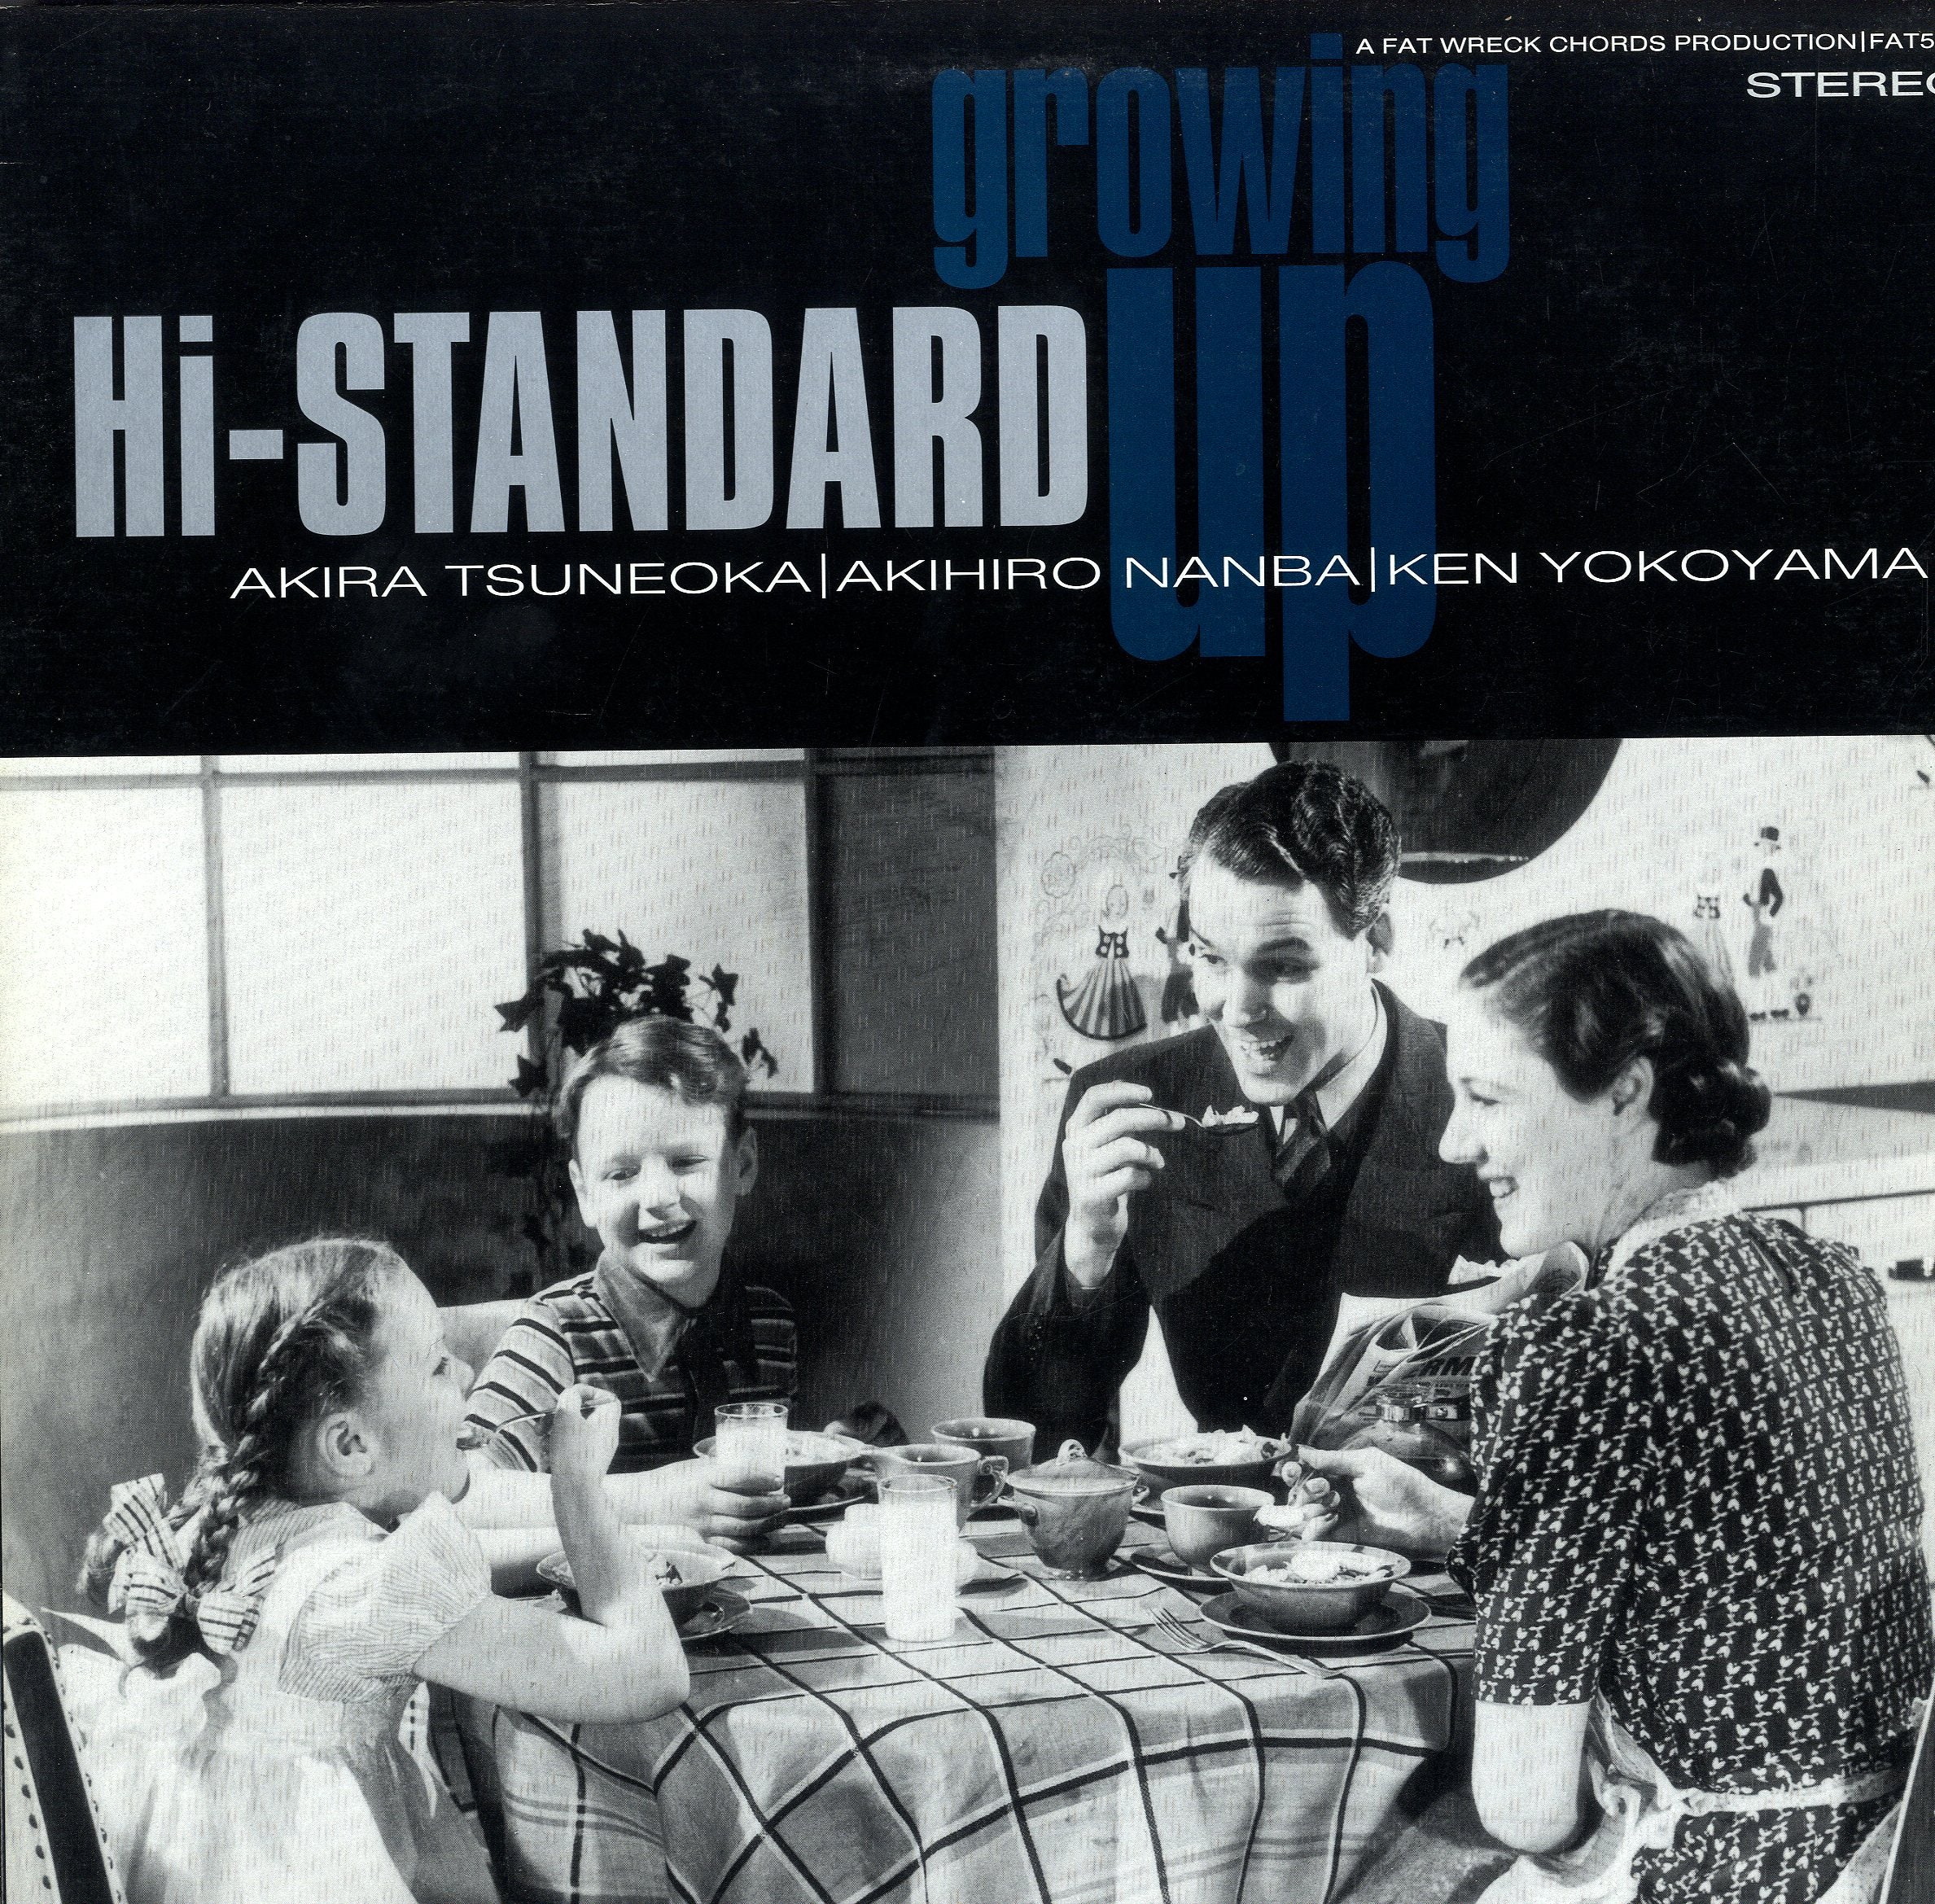 HI-STANDARD [Growing Up]